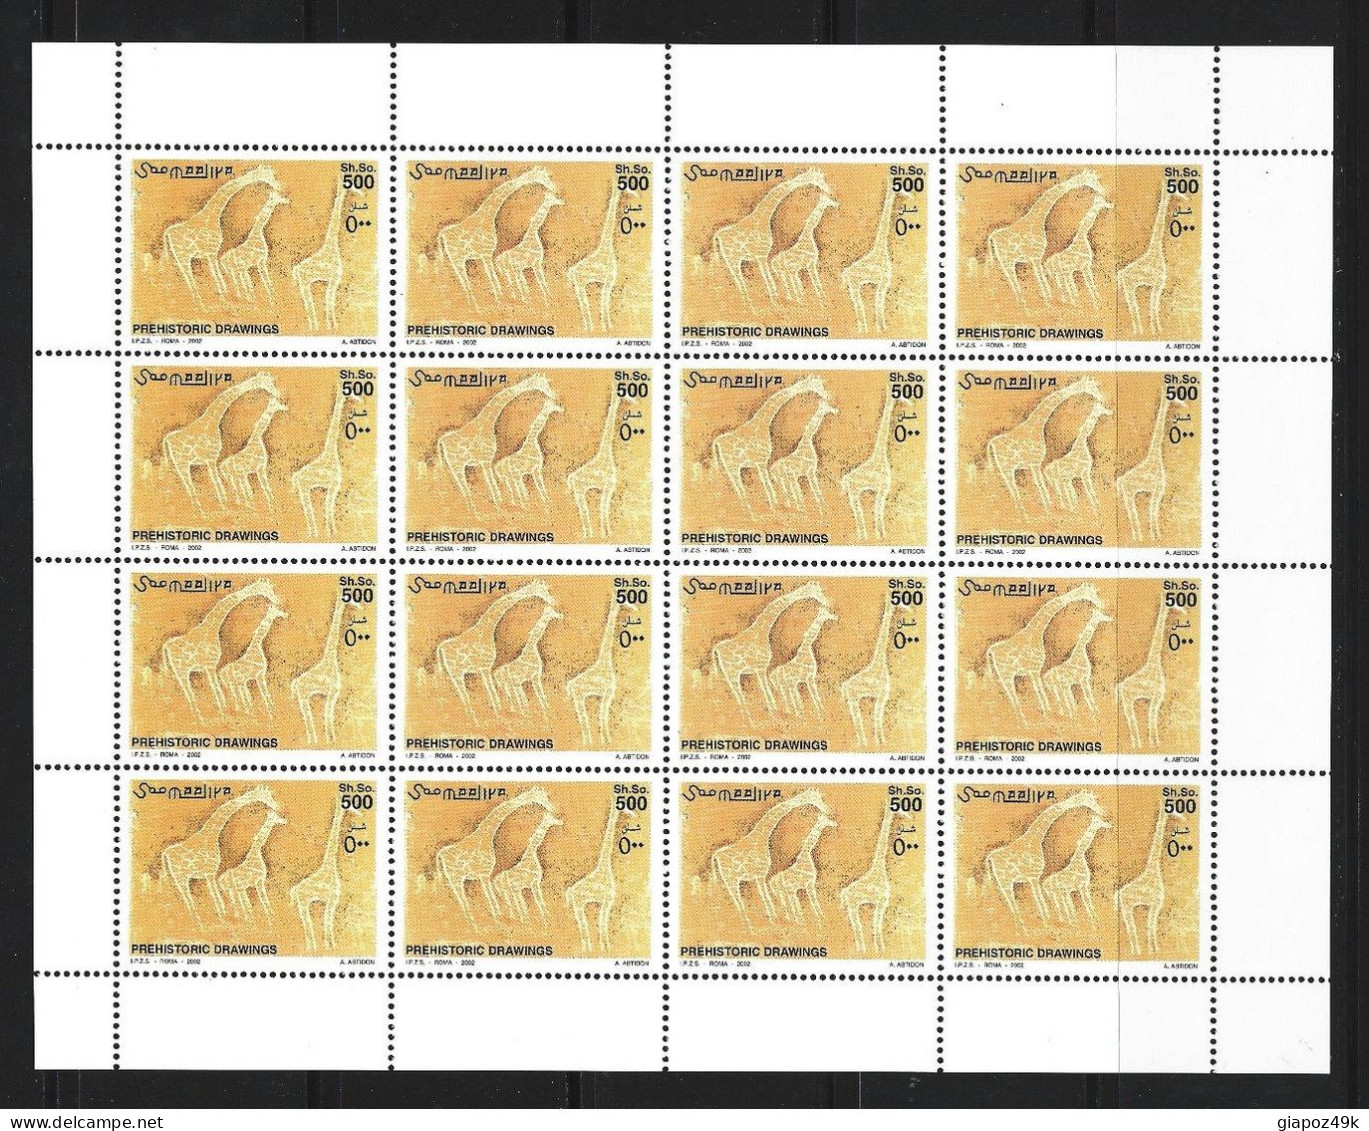 ● SOMALIA 2002 ֍ PITTURE PREISTORICHE ֍ N. 844 / 846 ** ● 3 Fogli Di 16 Esemplari ● Cat. 160 € ● Lotto XX ● - Somalie (1960-...)